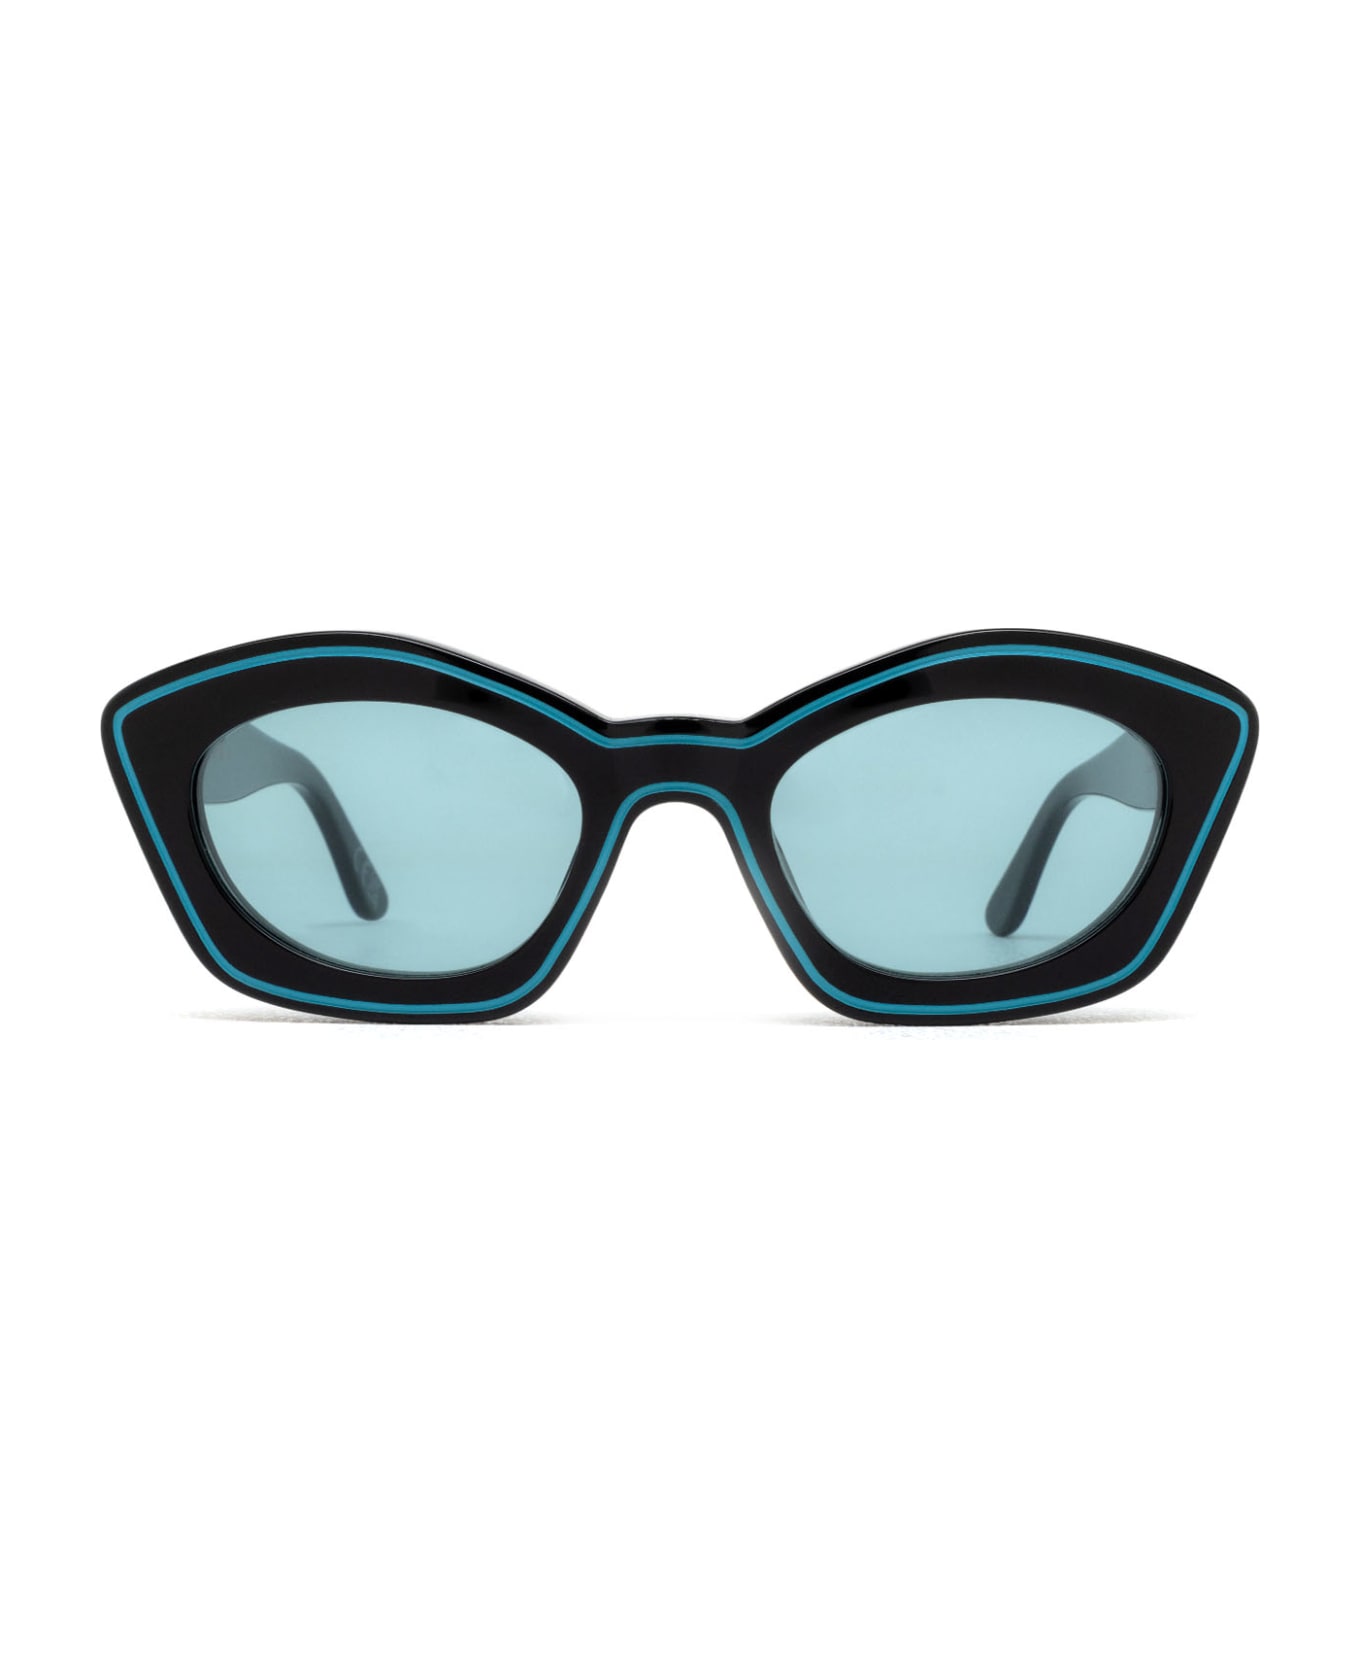 Marni Eyewear Kea Island Teal Teal Sunglasses - Teal Teal サングラス